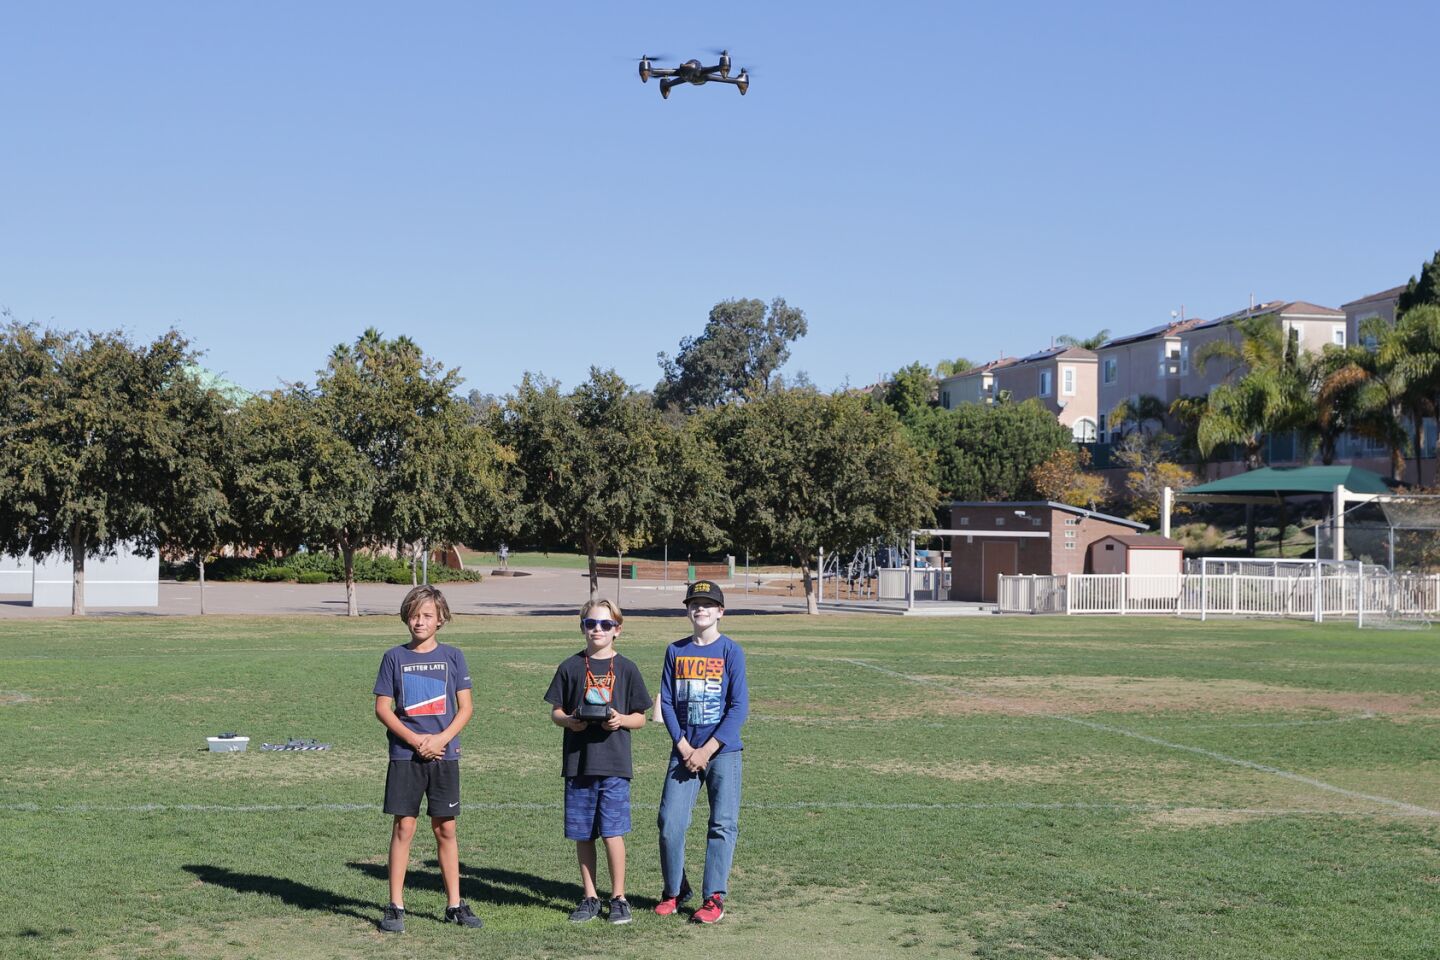 Jacob Chaves Kuss, Daniel Berionne, and Paxton Wiley-Szymanowski pilot a drone